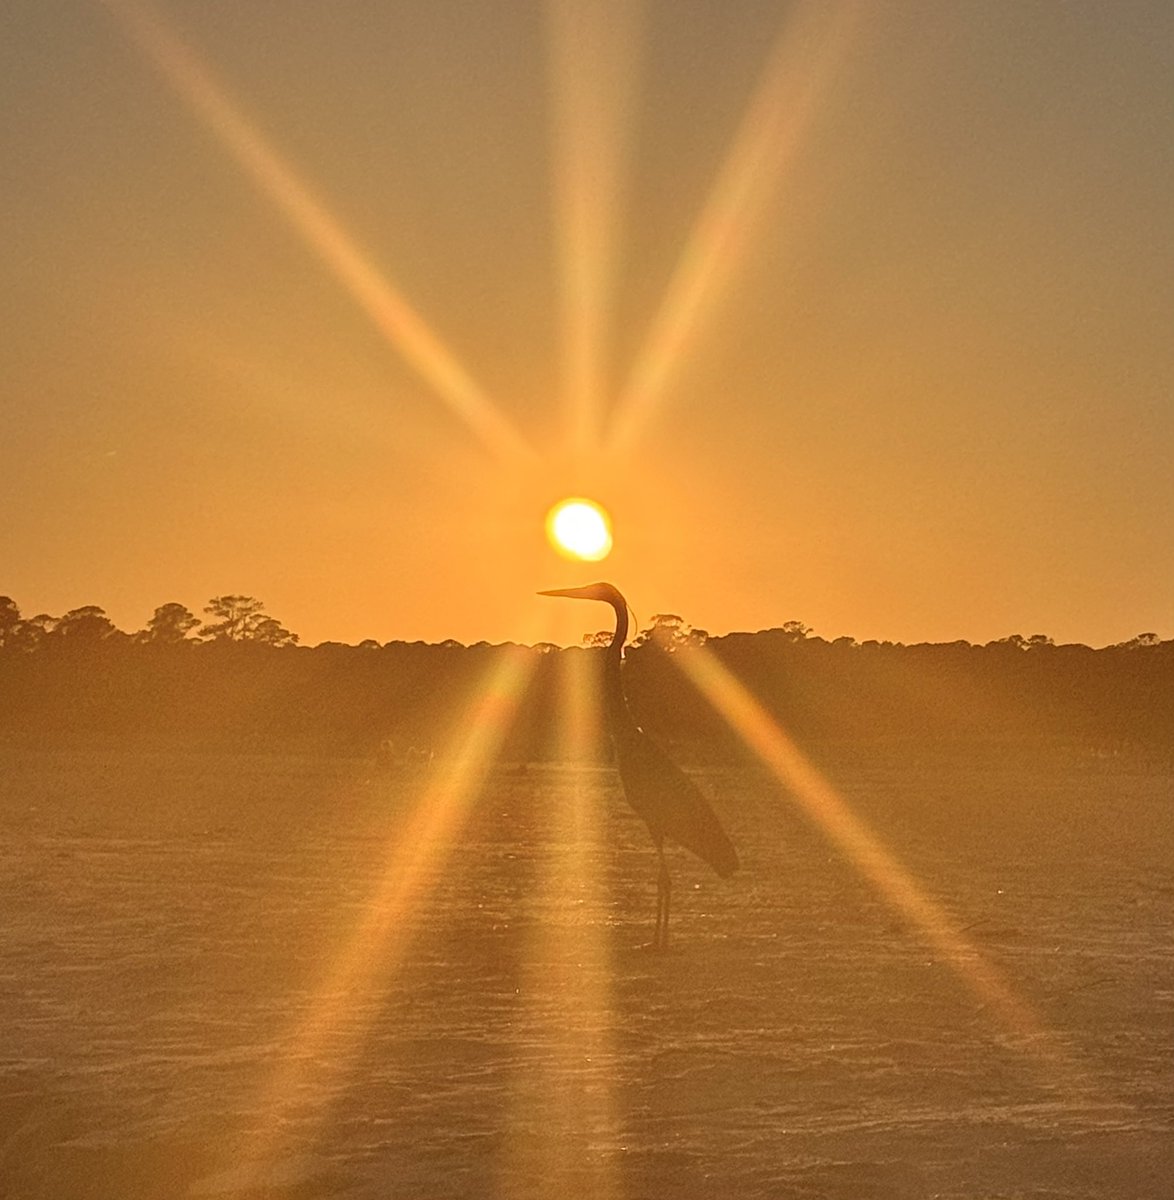 I Live For The Sun 🧡 Dauphin Island, Alabama #BlueHeron #Photography #Sunburst #Weather #Sunset #Sunrise #Sun @spann @RealSaltLife @NWSMobile @Kelly_WPMI @ThomasGeboyWX @PicPoet @MyRadarWX @ThePhotoHour @weatherchannel @StormHour @DauphinIslandSM